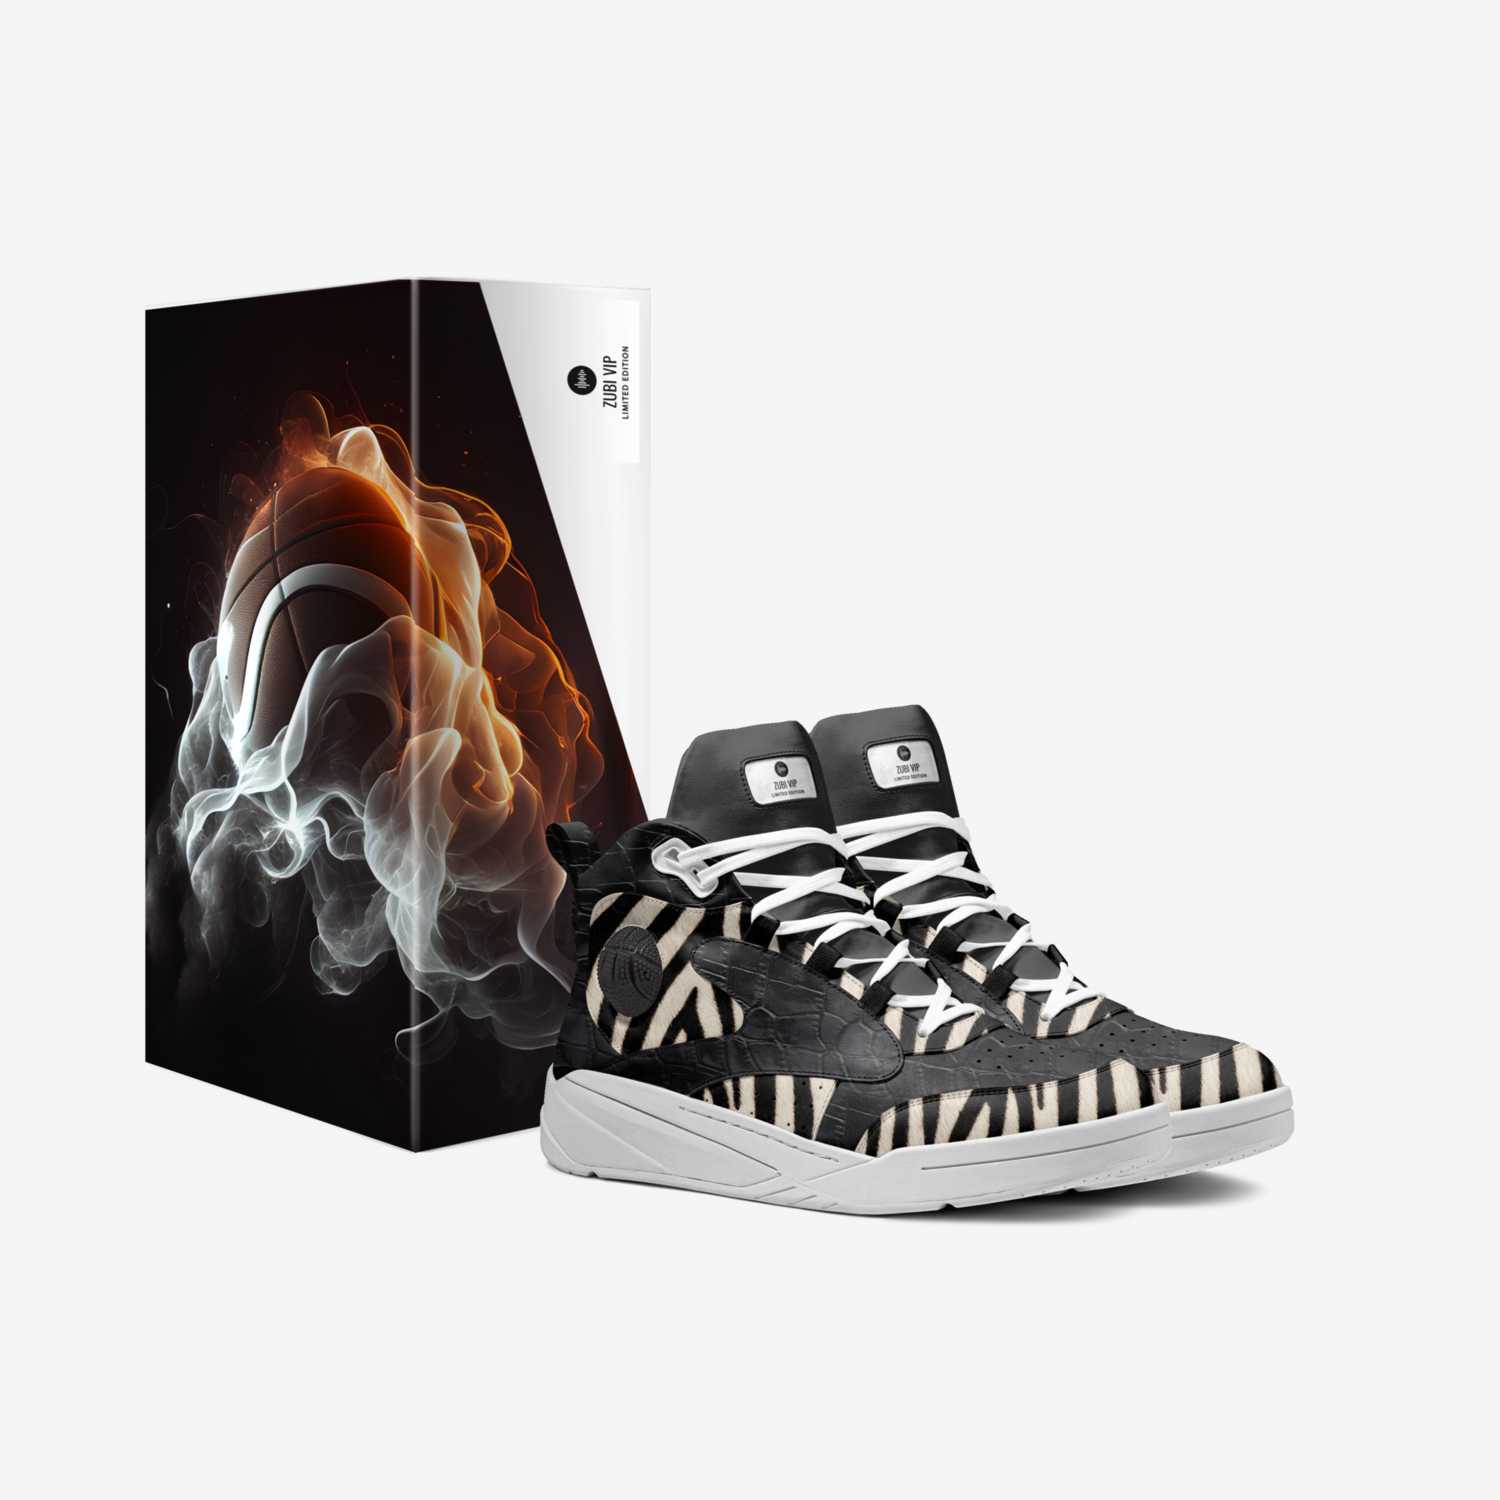 ZUBI AIR custom made in Italy shoes by Carlos Zubizarreta | Box view